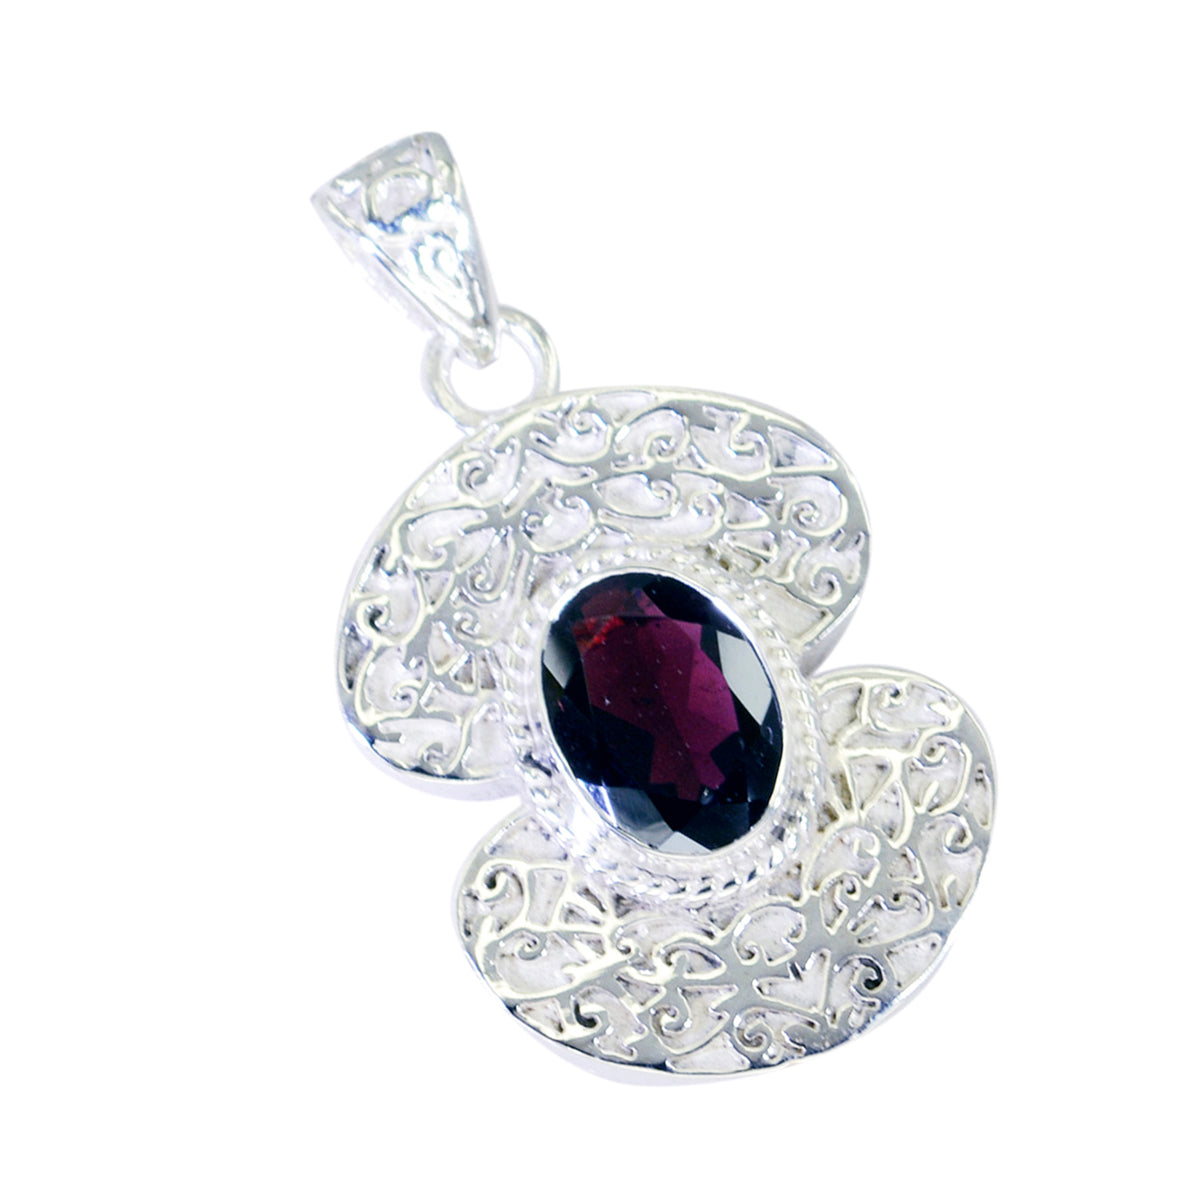 Riyo Nice Gemstone Oval Faceted Red Garnet Sterling Silver Pendant Gift For Handmade